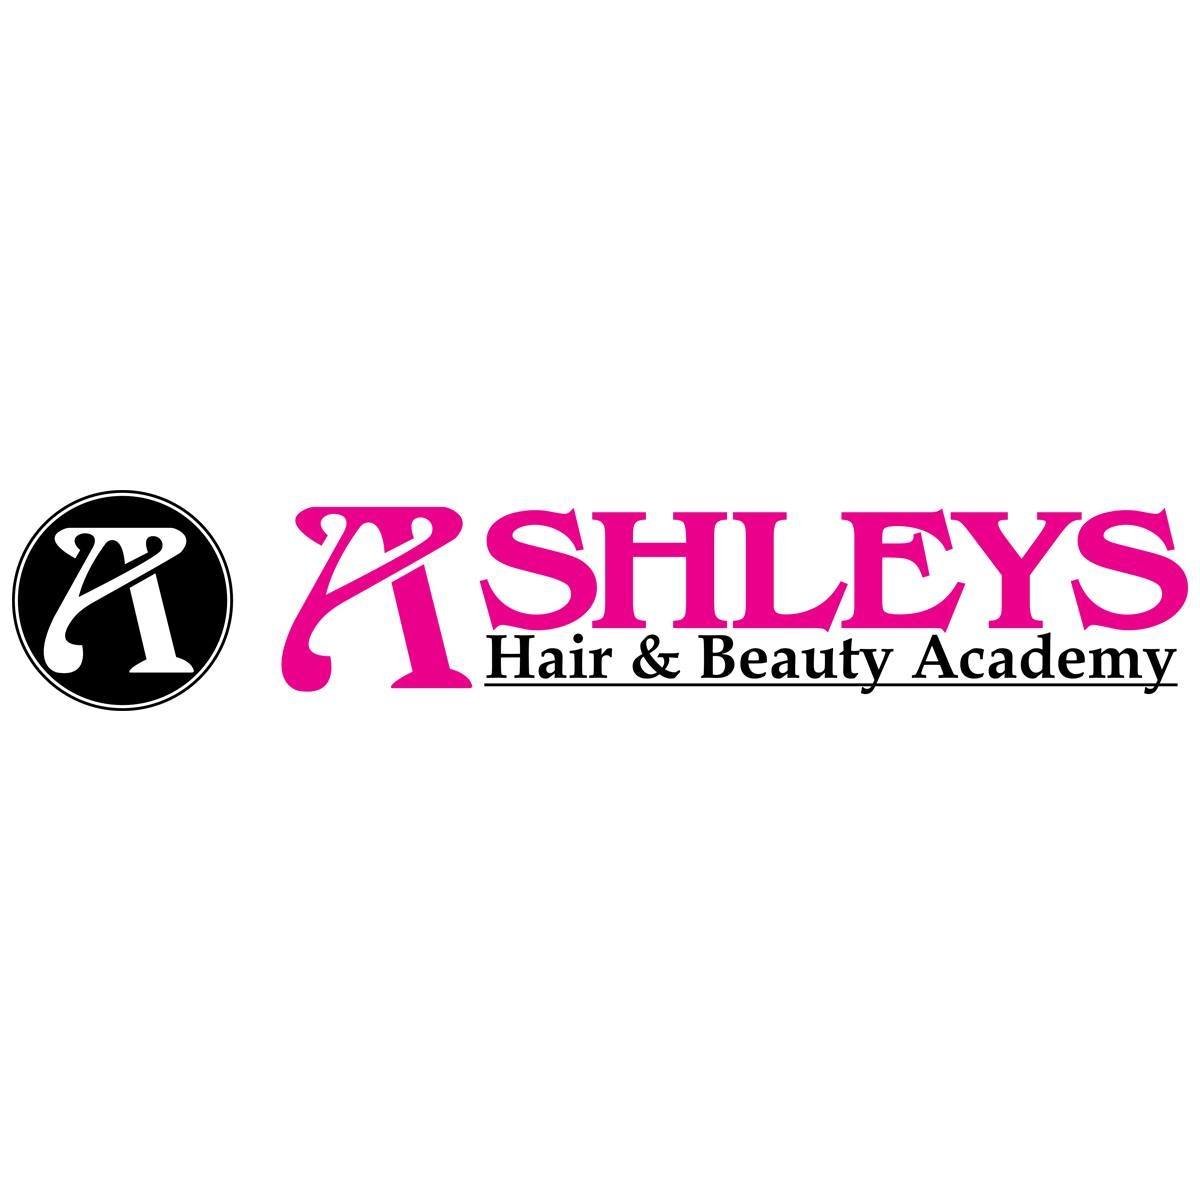 Ashleys Curtain Making & Sewing (Fashion Department)